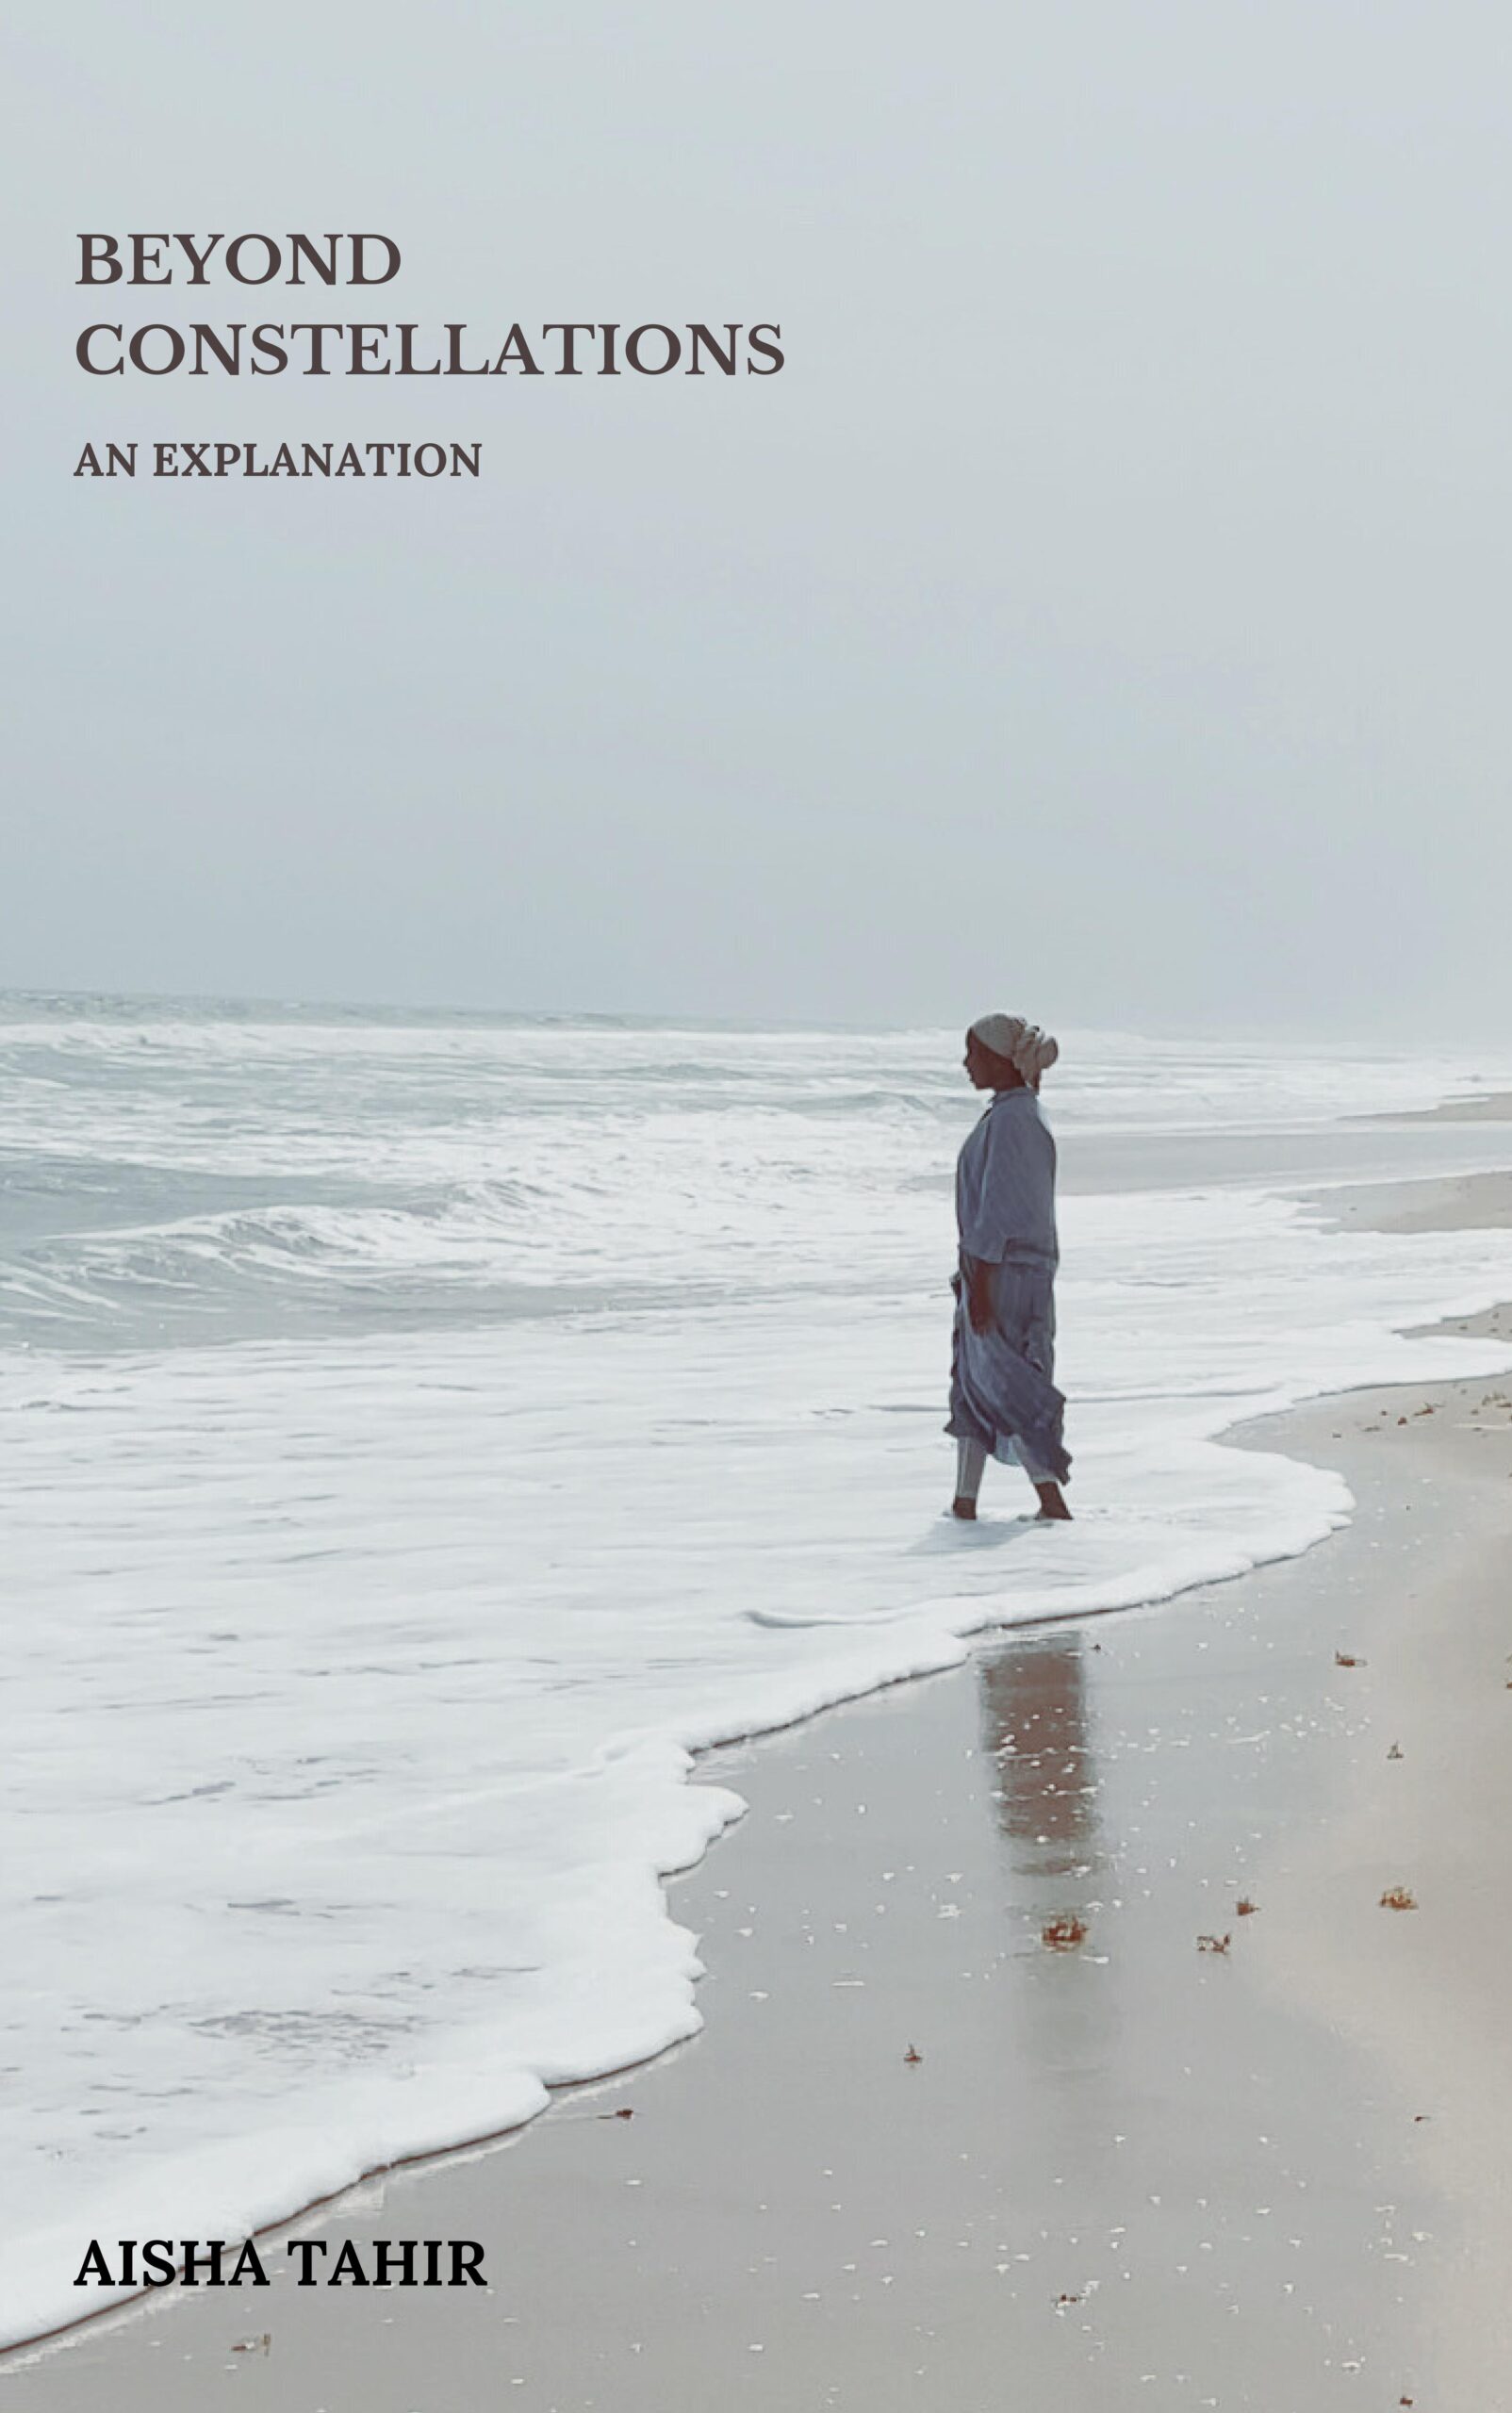 FREE: Beyond Constellations by Aisha Tahir